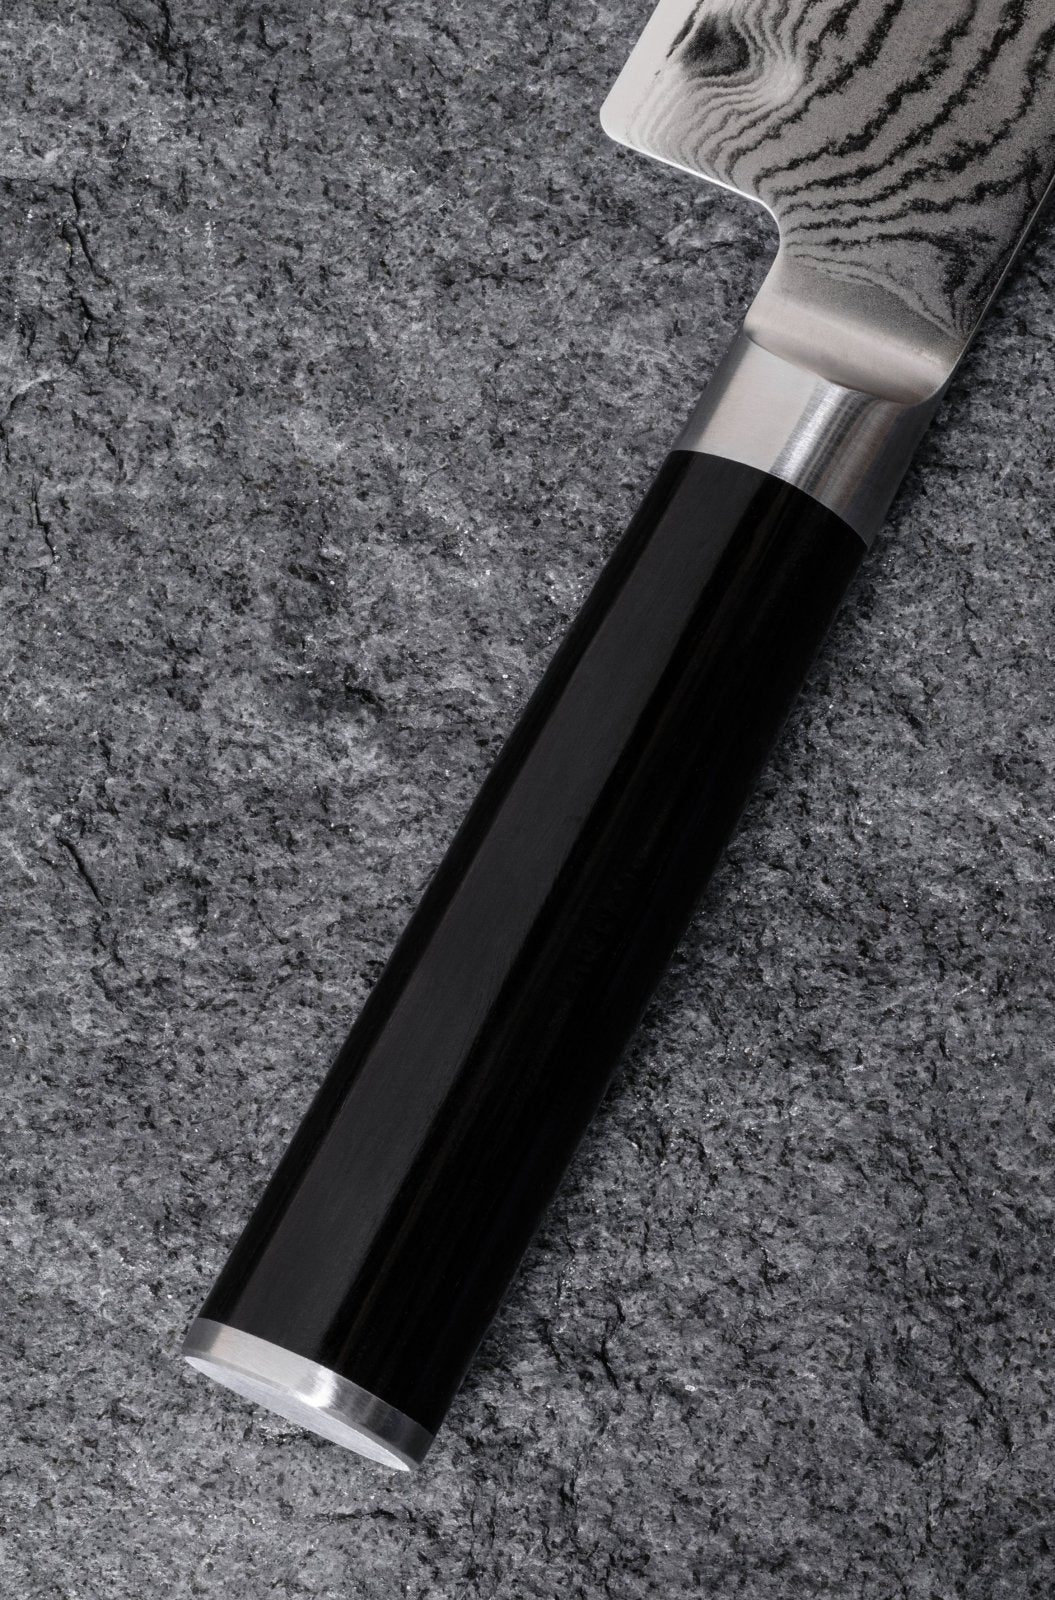 KAI Shun 19cm Wide Santoku Knife - KAI-DM-0717 - The Cotswold Knife Company